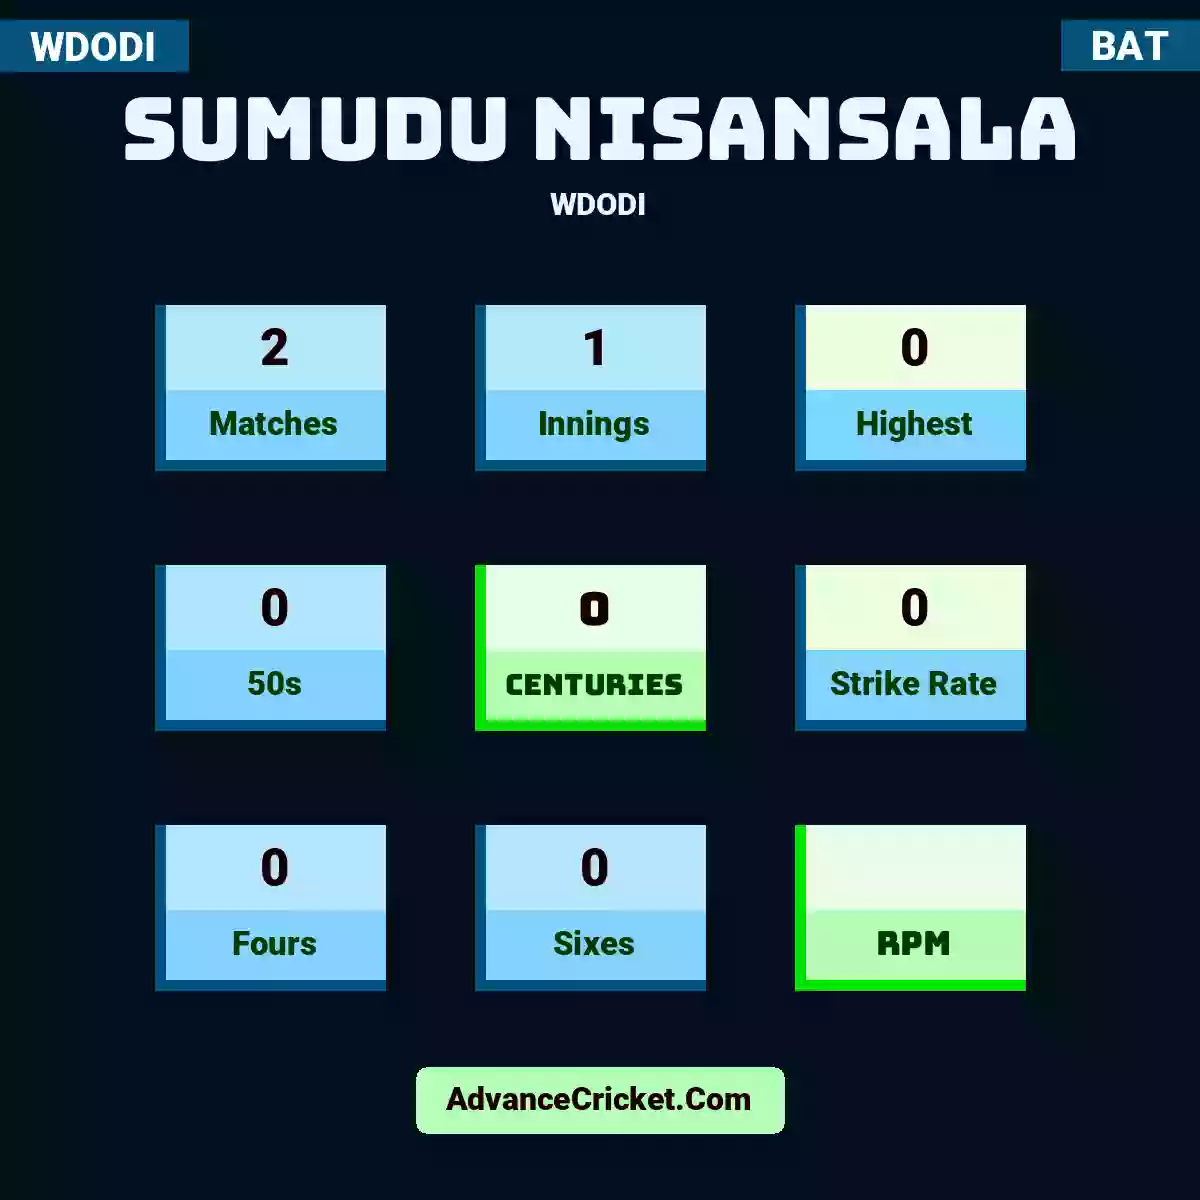 Sumudu Nisansala WDODI , Sumudu Nisansala played 2 matches, scored 0 runs as highest, 0 half-centuries, and 0 centuries, with a strike rate of 0. S.Nisansala hit 0 fours and 0 sixes.